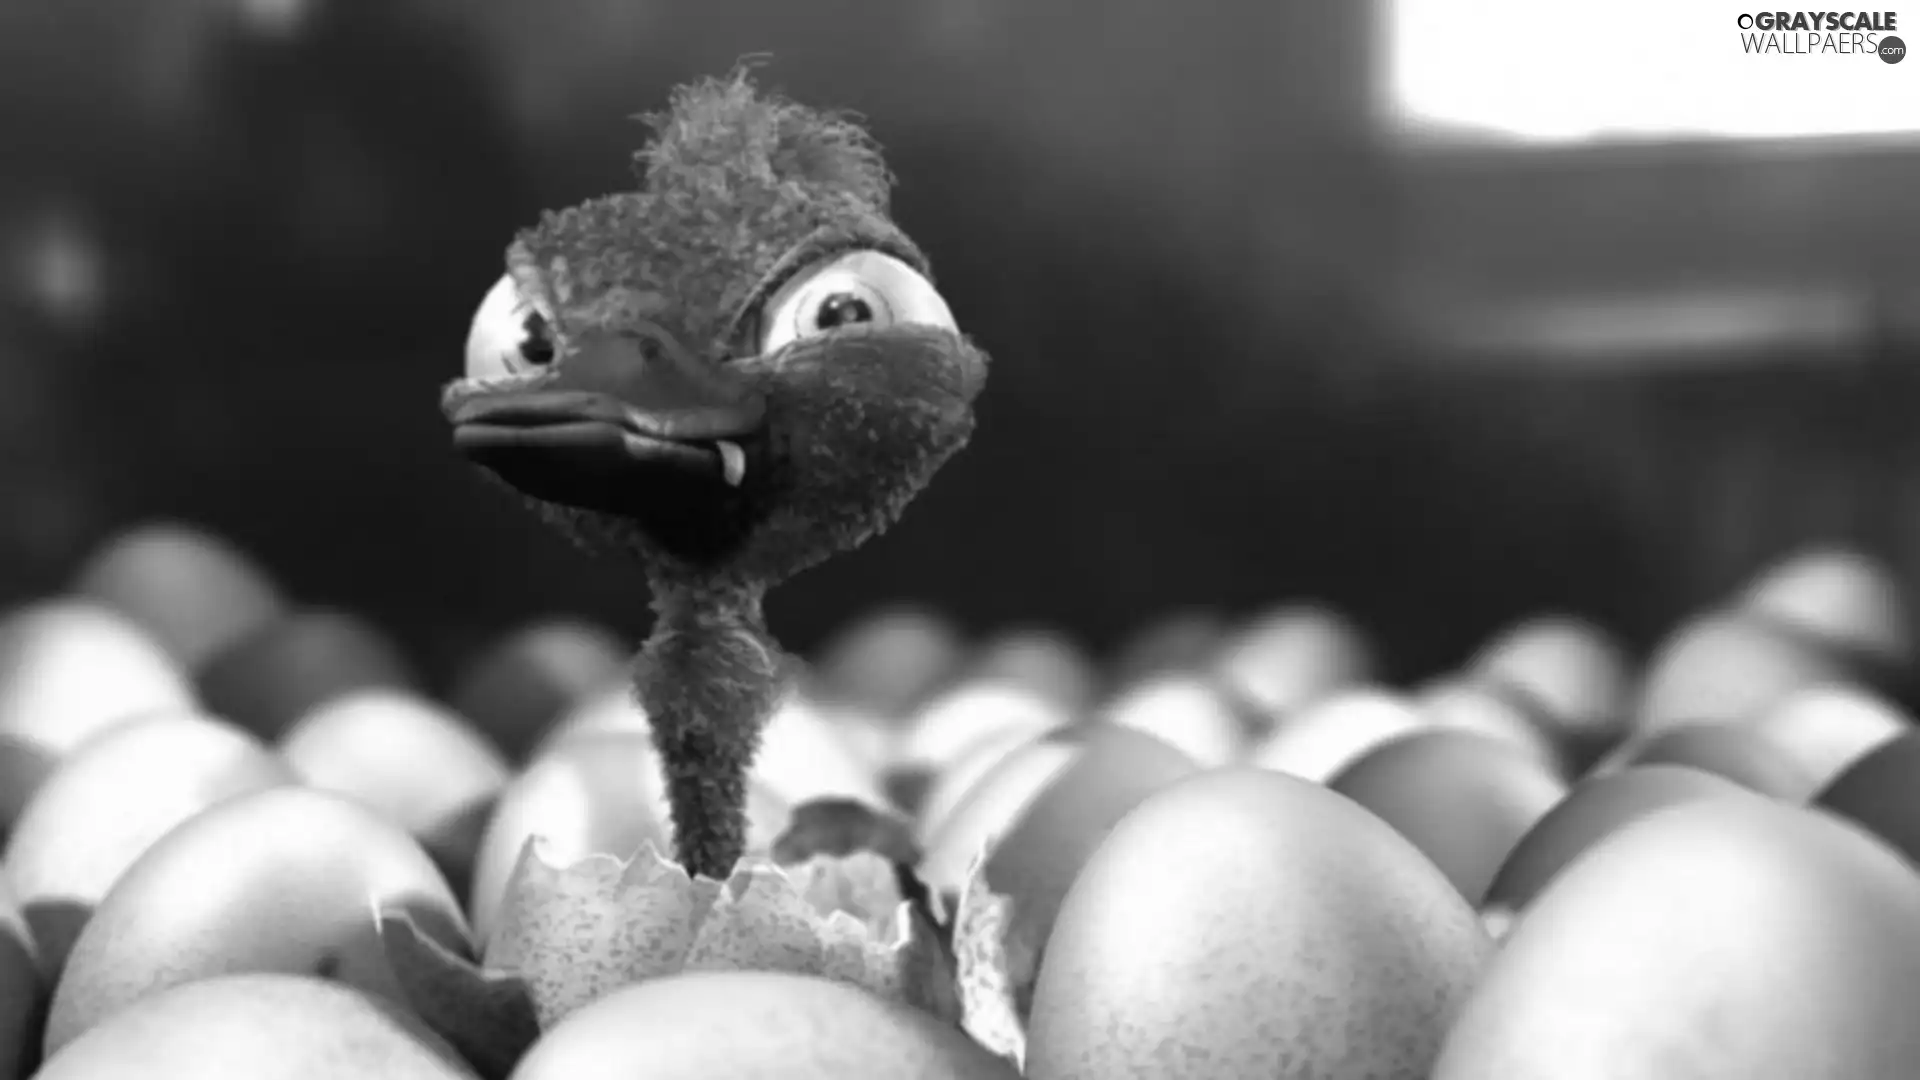 ostrich, eggs, small